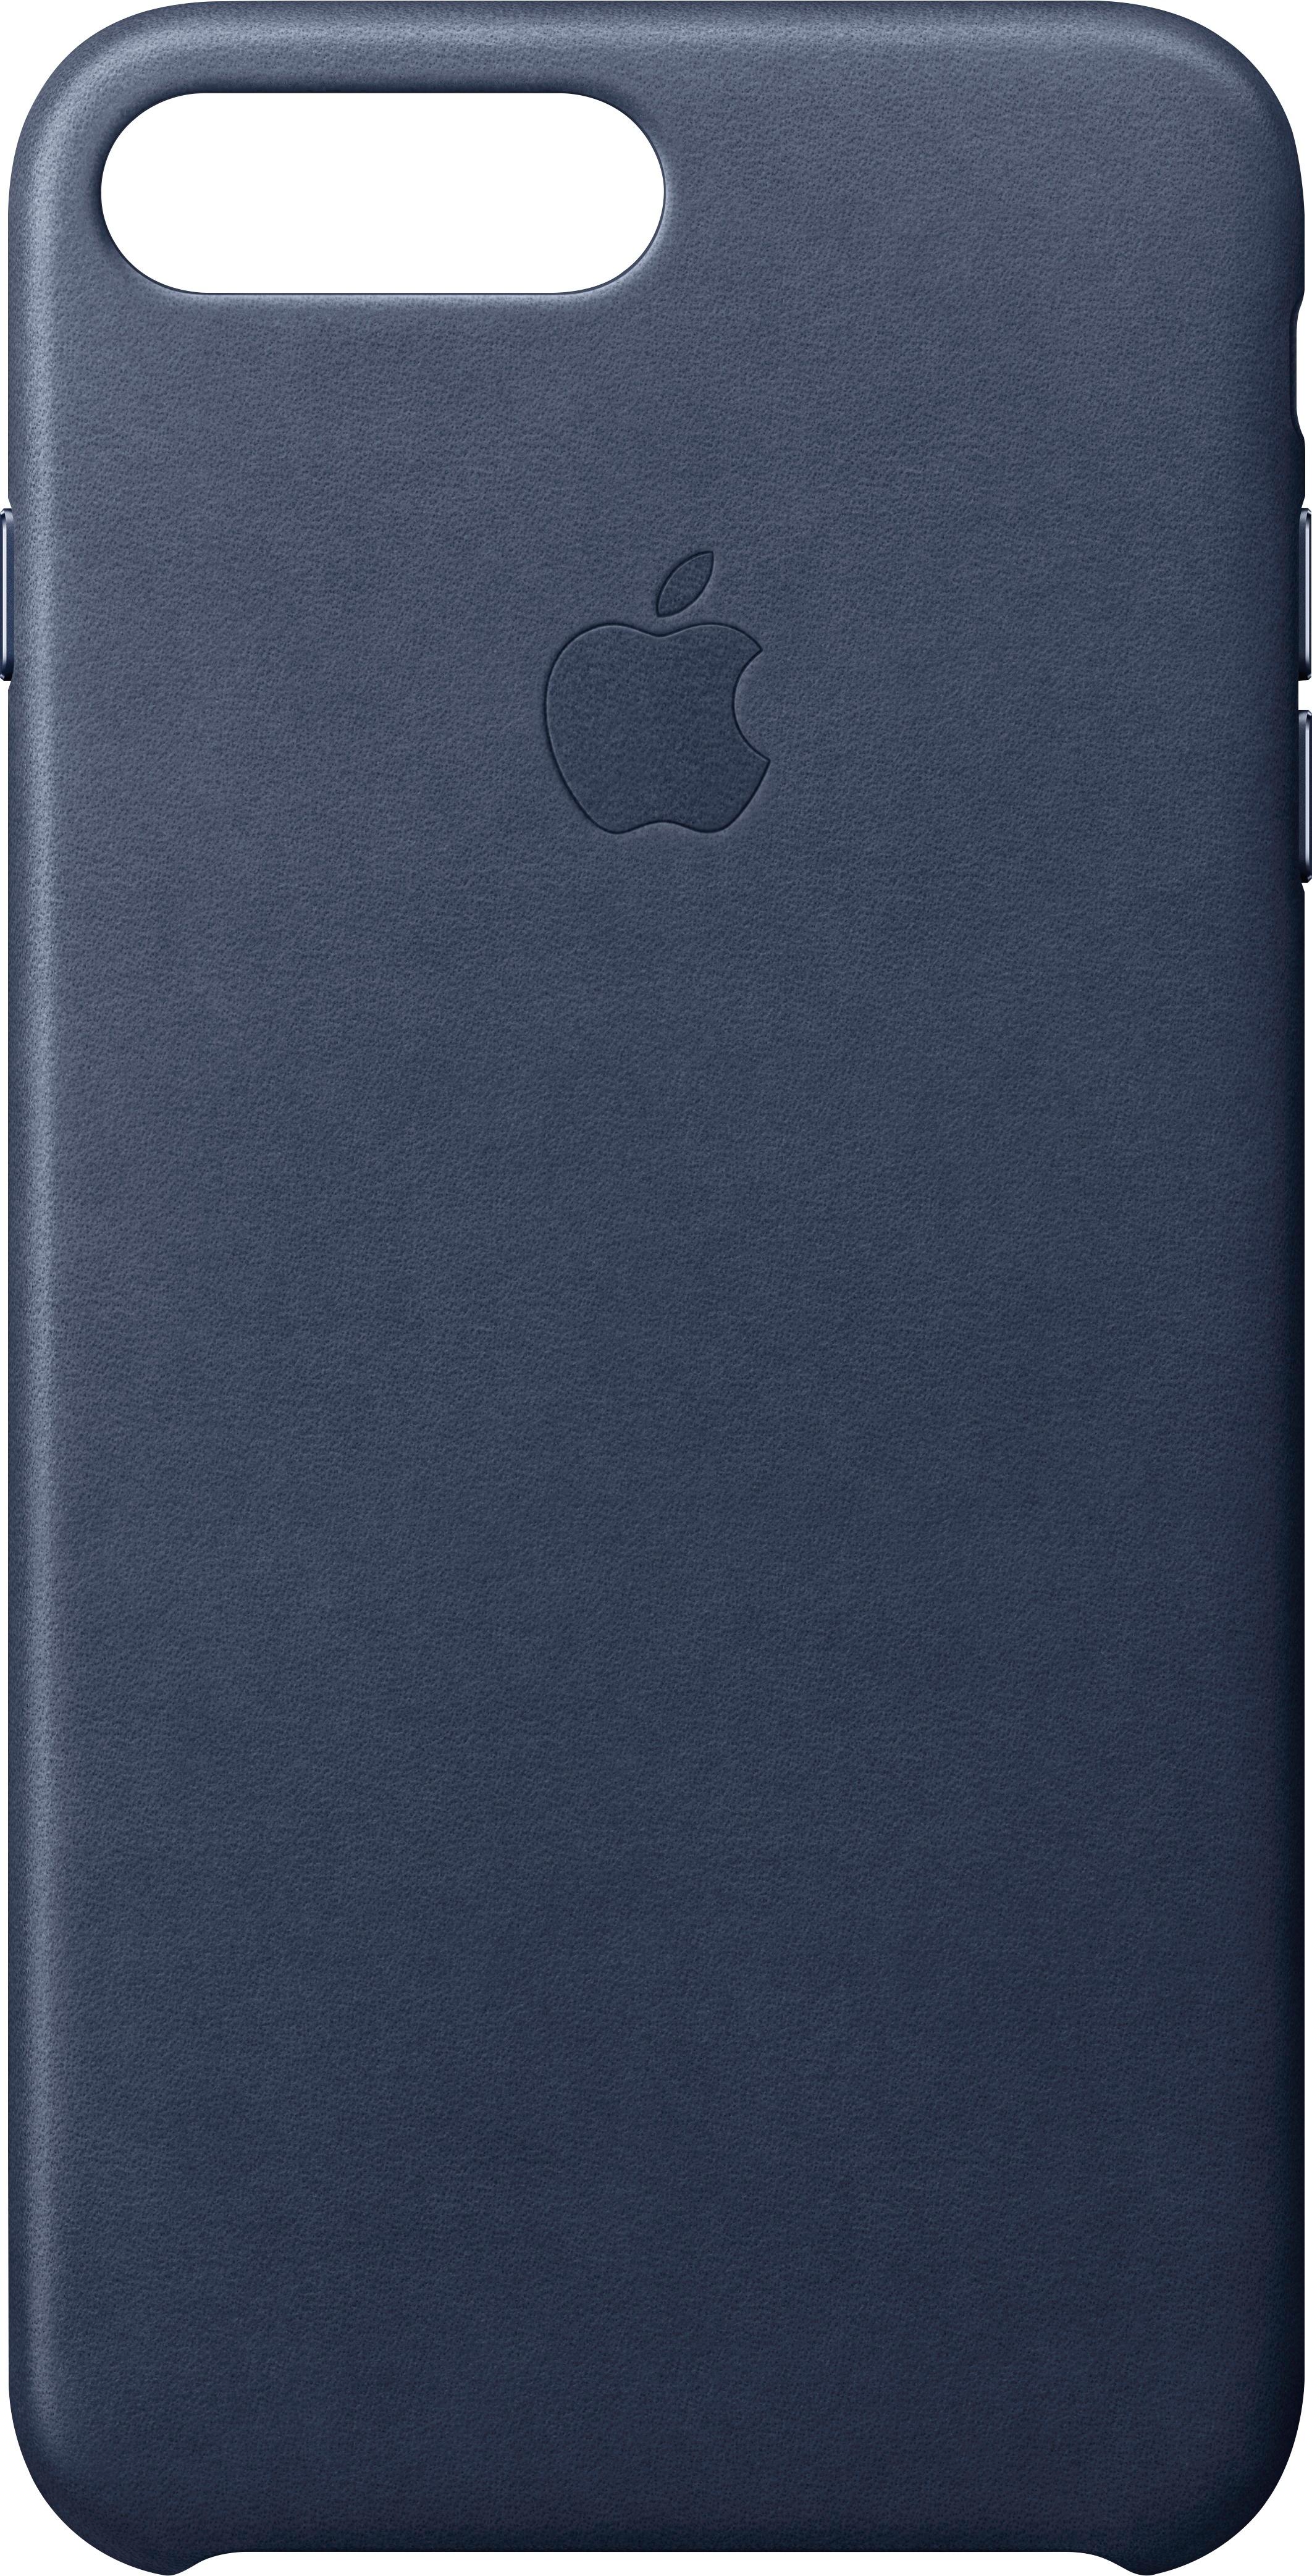 Mordrin minimum Kwaadaardige tumor Apple iPhone® 8 Plus/7 Plus Leather Case Midnight Blue MQHL2ZM/A - Best Buy